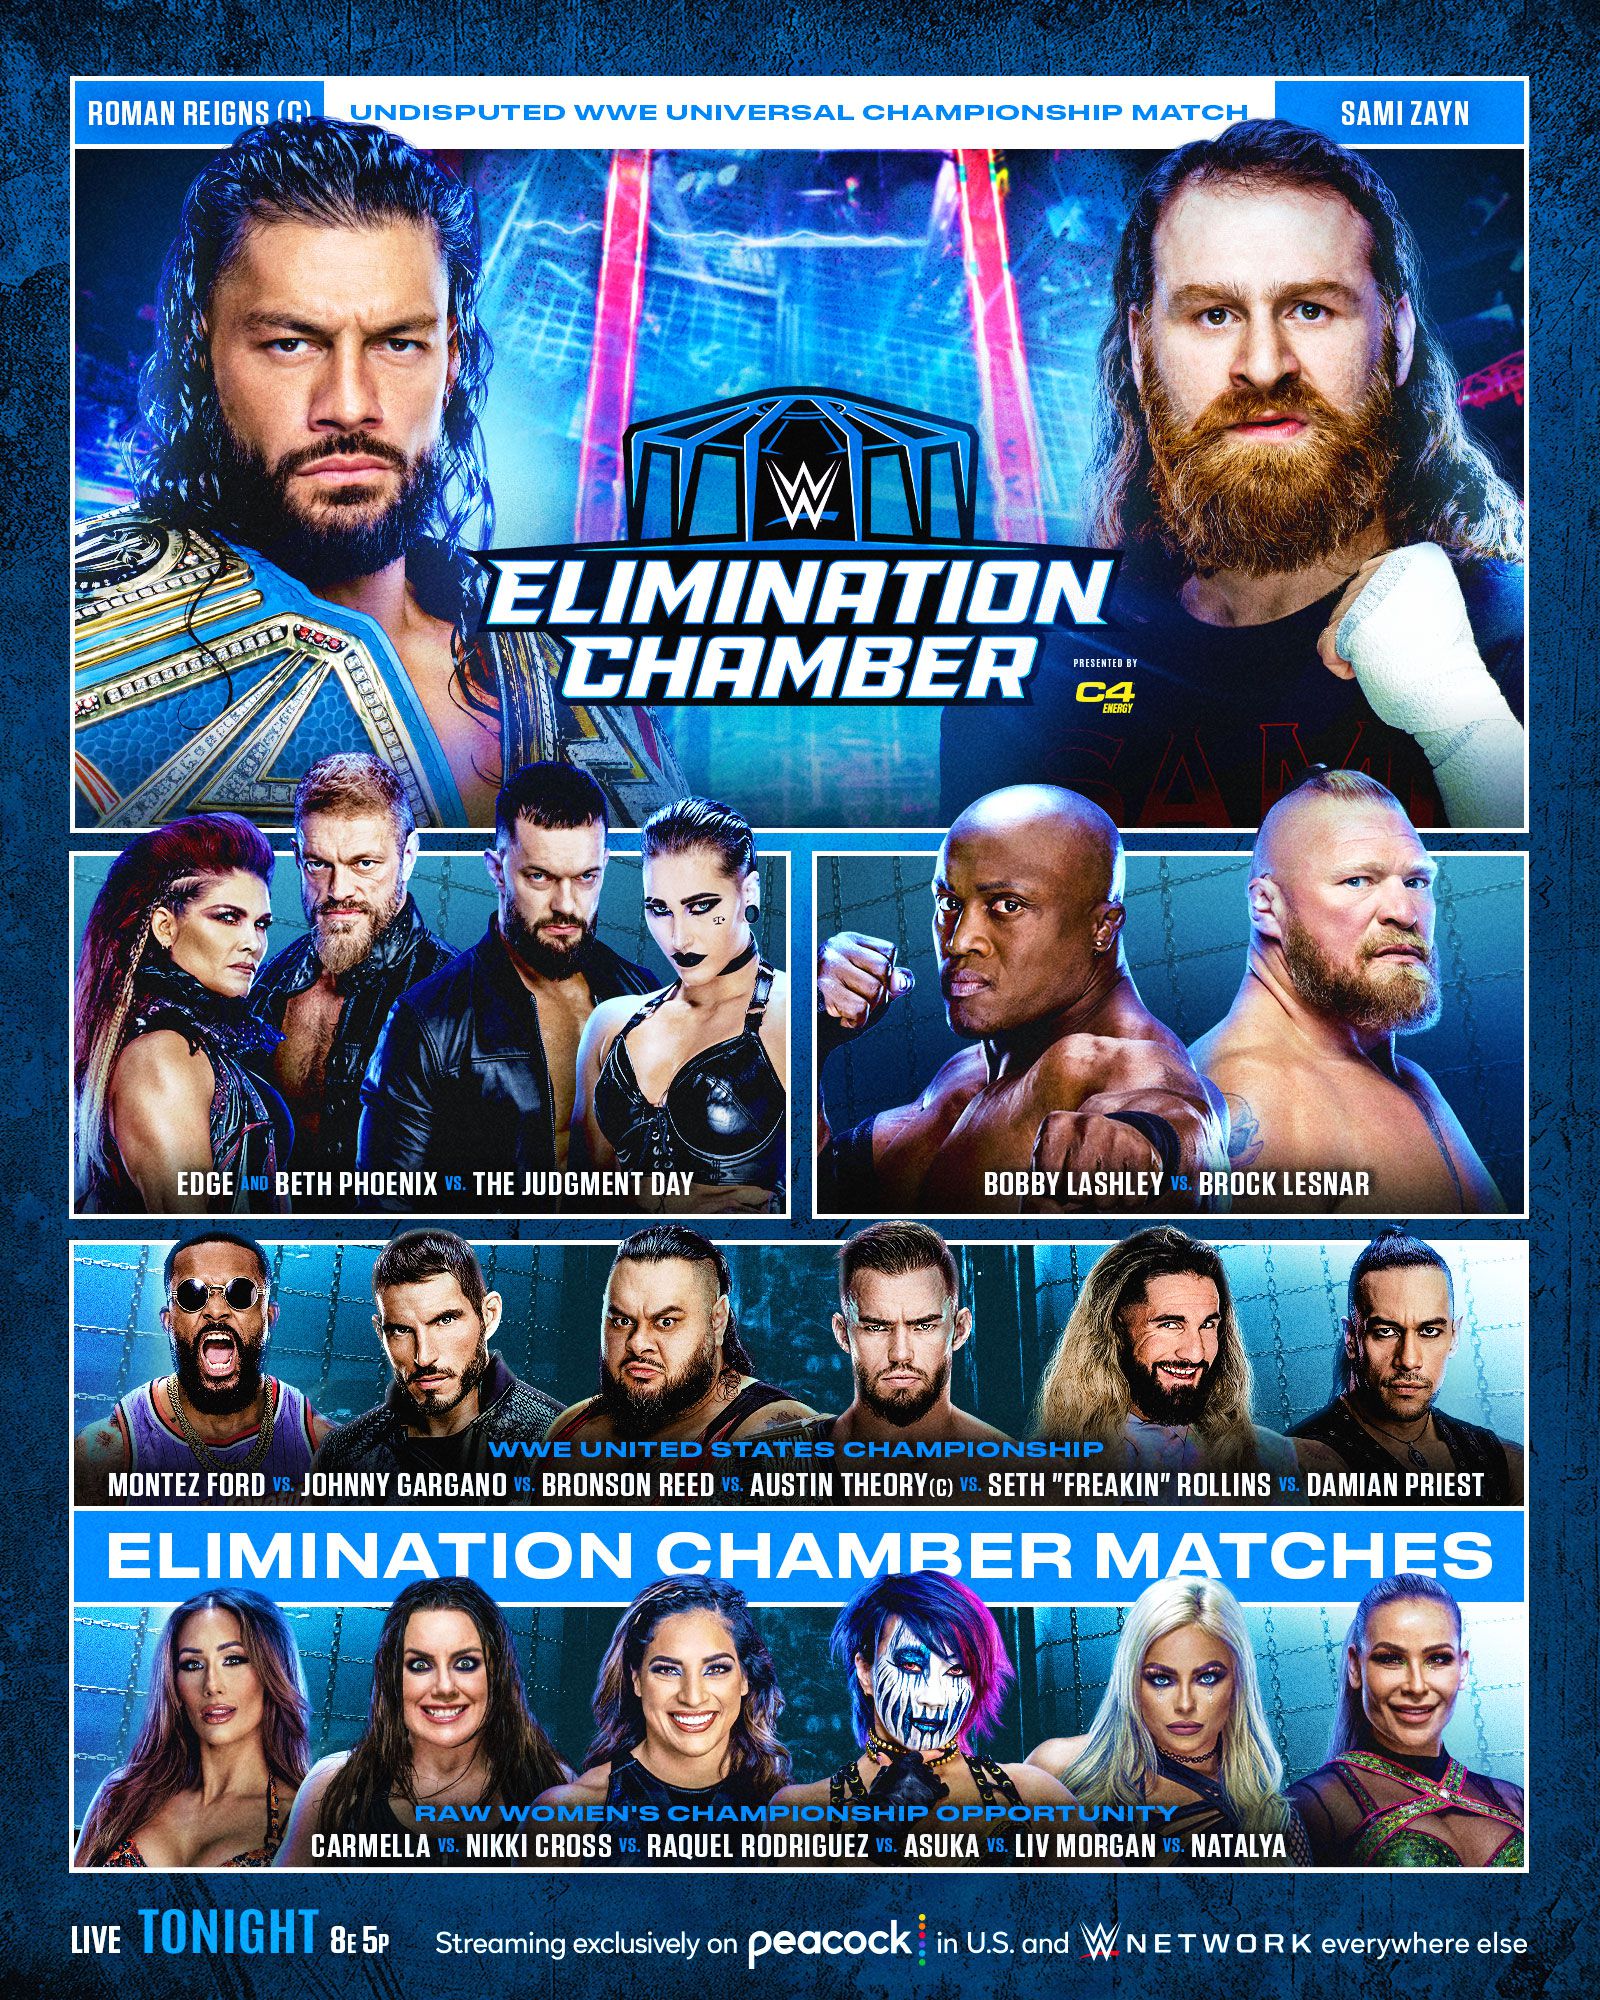 WWE Elimination Chamber Roman Reigns defeats Sami Zayn to remain